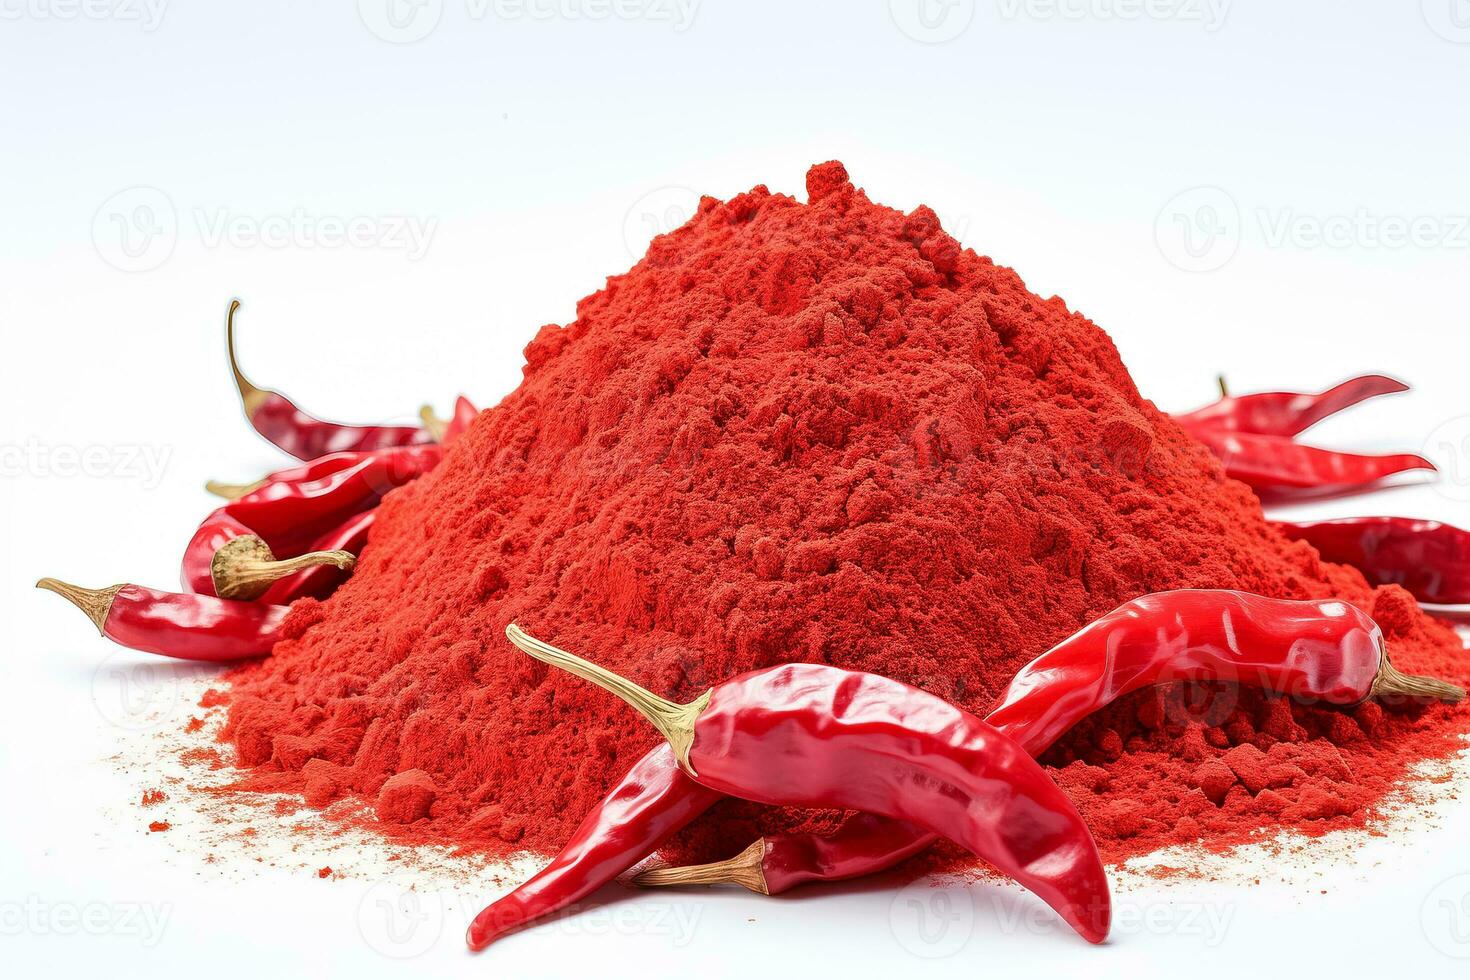 Ground red chili pepper on a white background condensed description photo